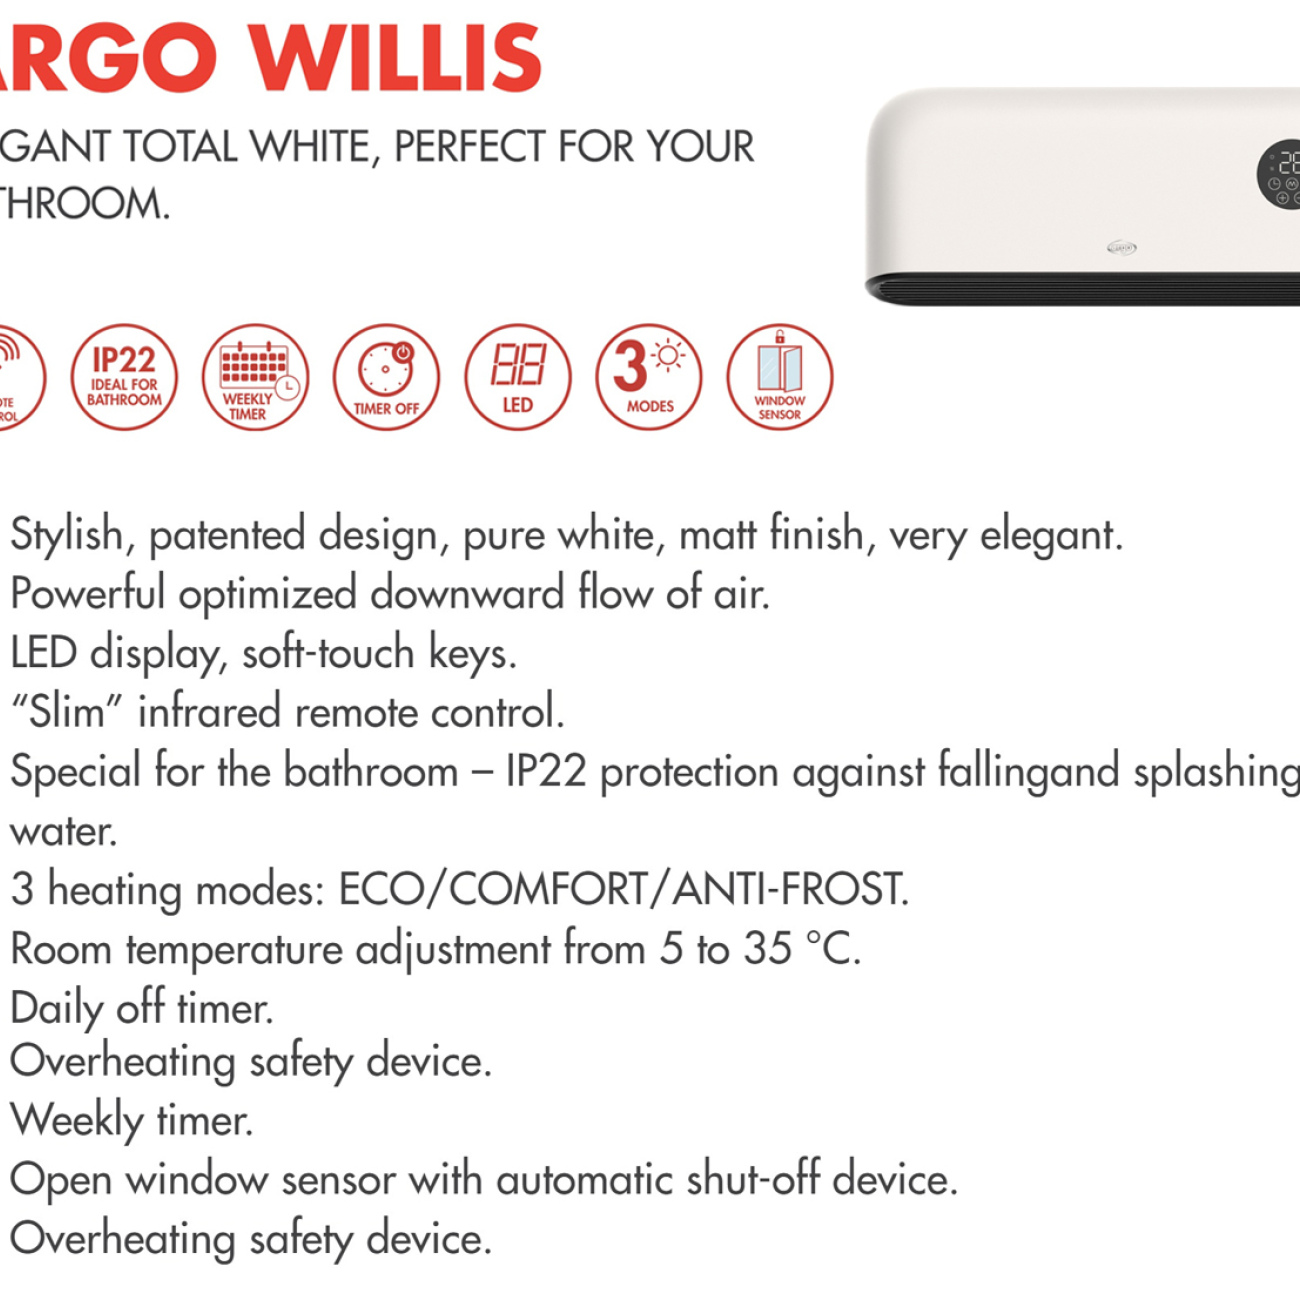 1100/2000W, bathroom, wall heater, remote, blue LED display, timer, IP22, open-window sensor, ARGOCLIMA WILLIS